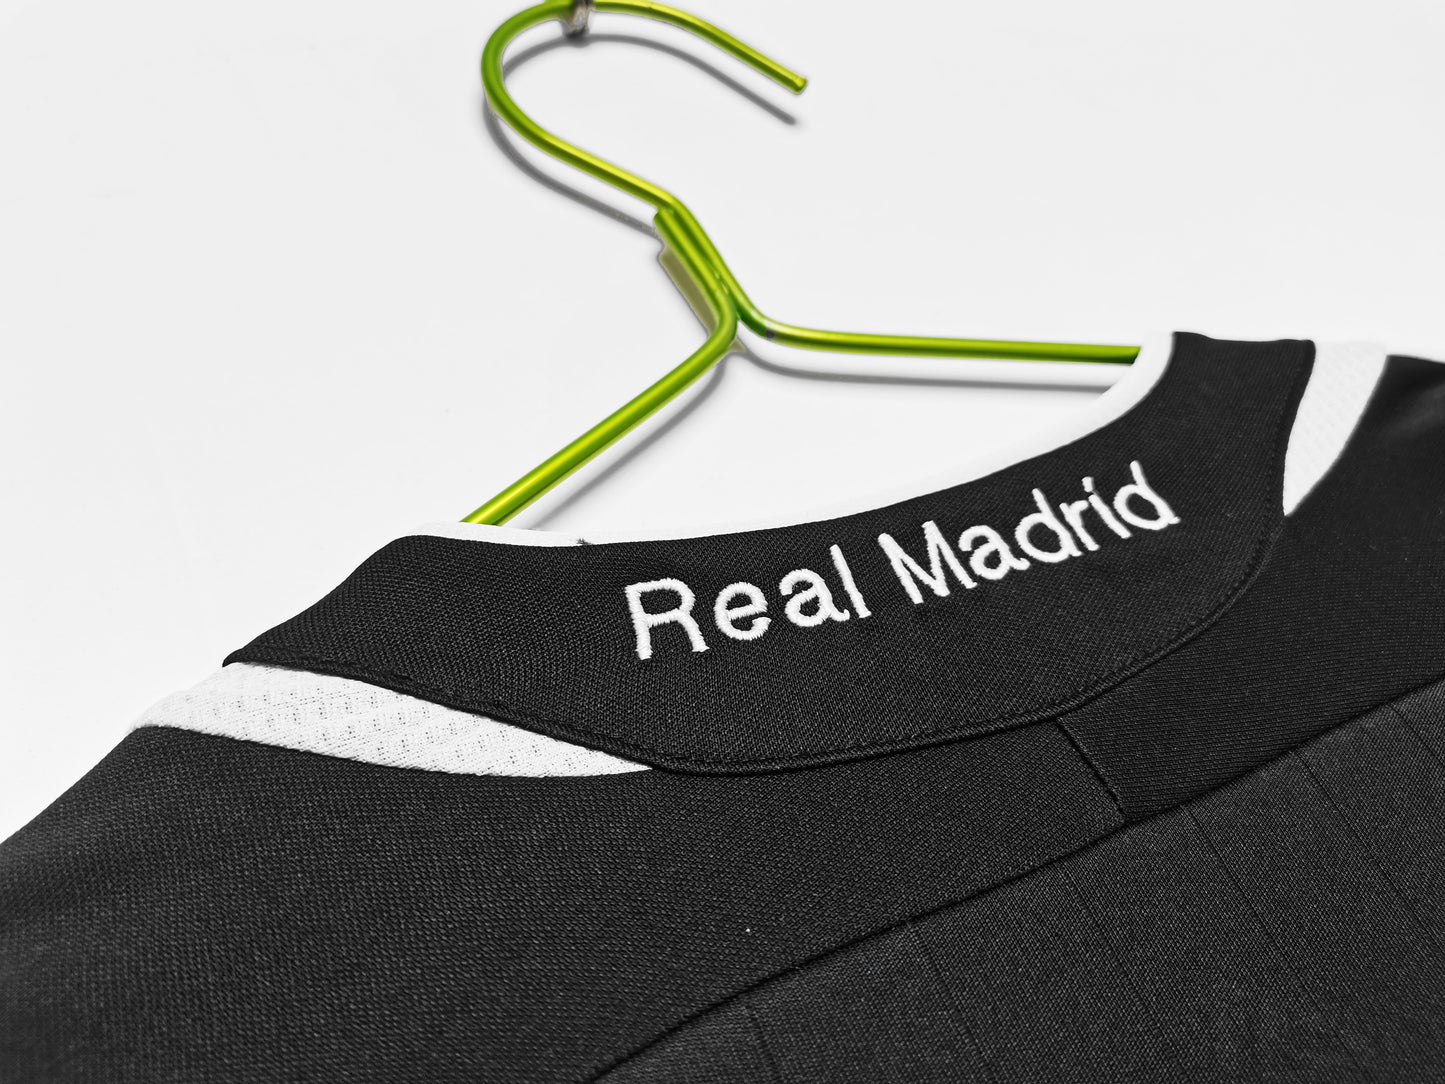 2006/07 Real Madrid Away Long Sleeve Retro Kit